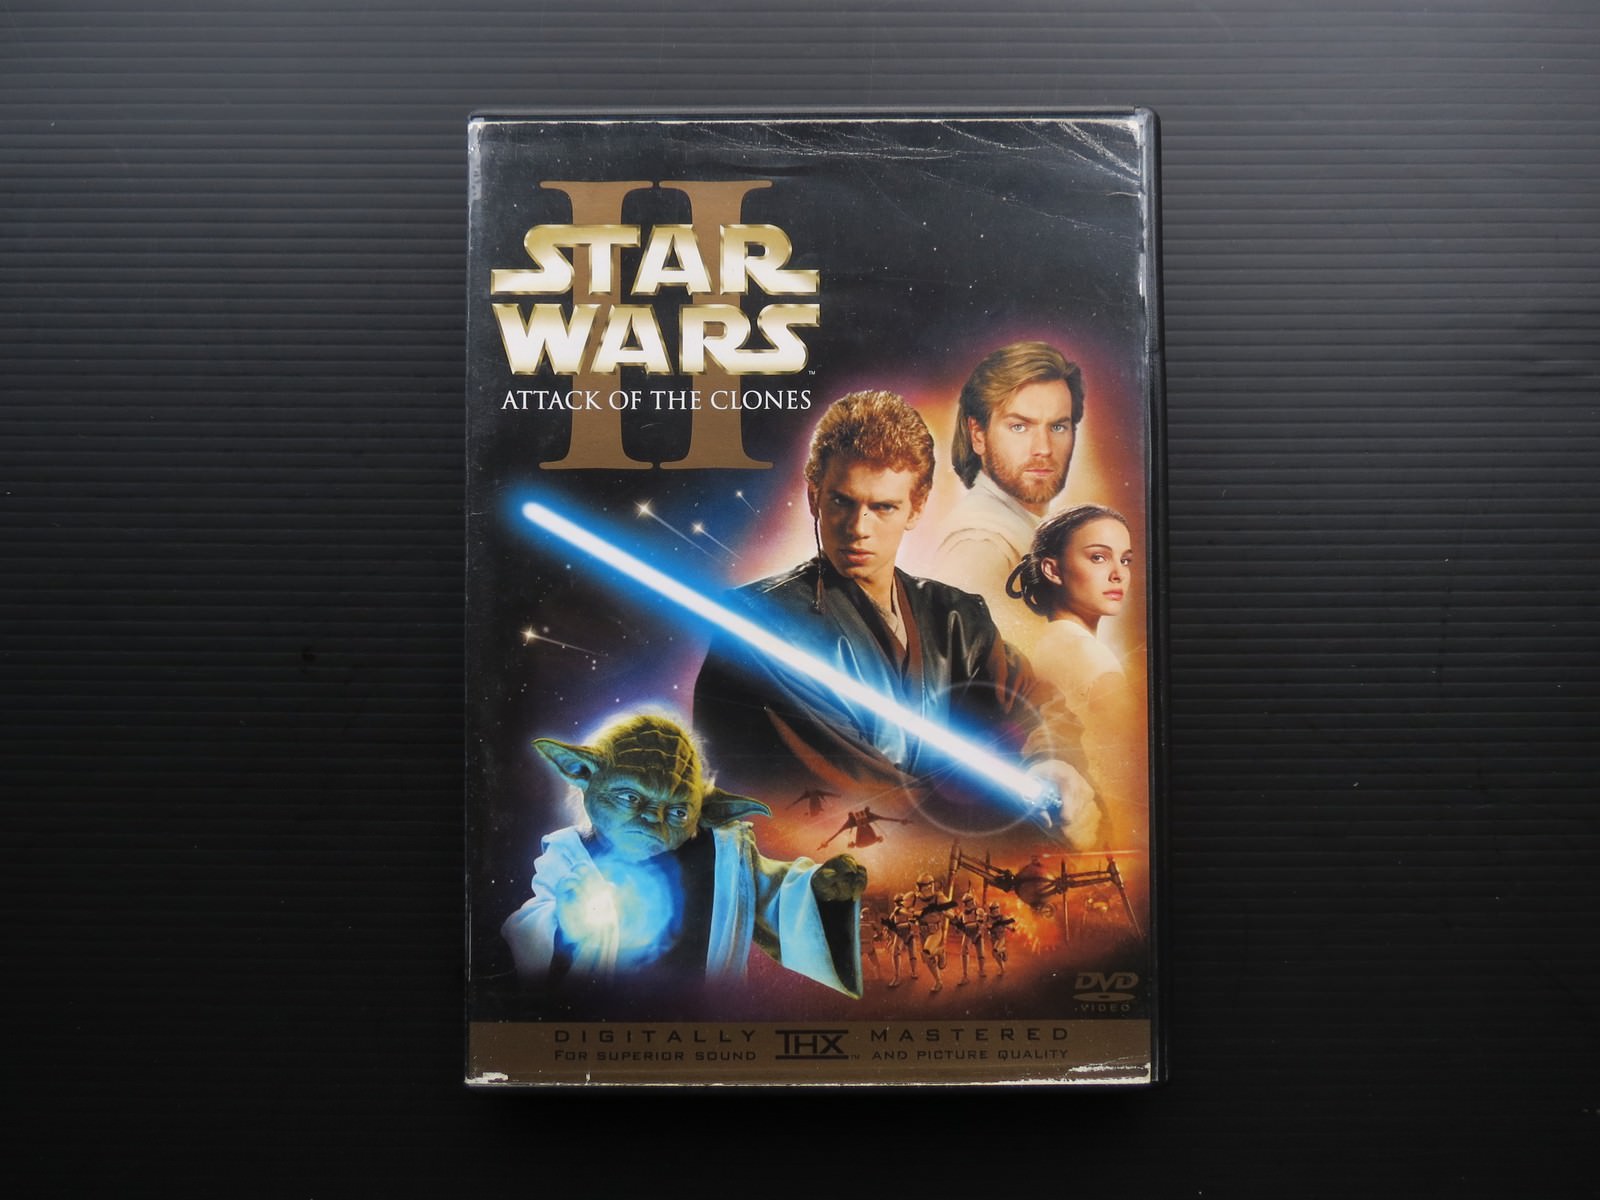 Movie, Star Wars Episode II: Attack of the Clones(美國, 2002) / 星際大戰二部曲：複製人全面進攻(台灣) / 星球大战前传：克隆人的进攻(中國) / 星球大戰前傳：複製人侵略(香港), 電影DVD